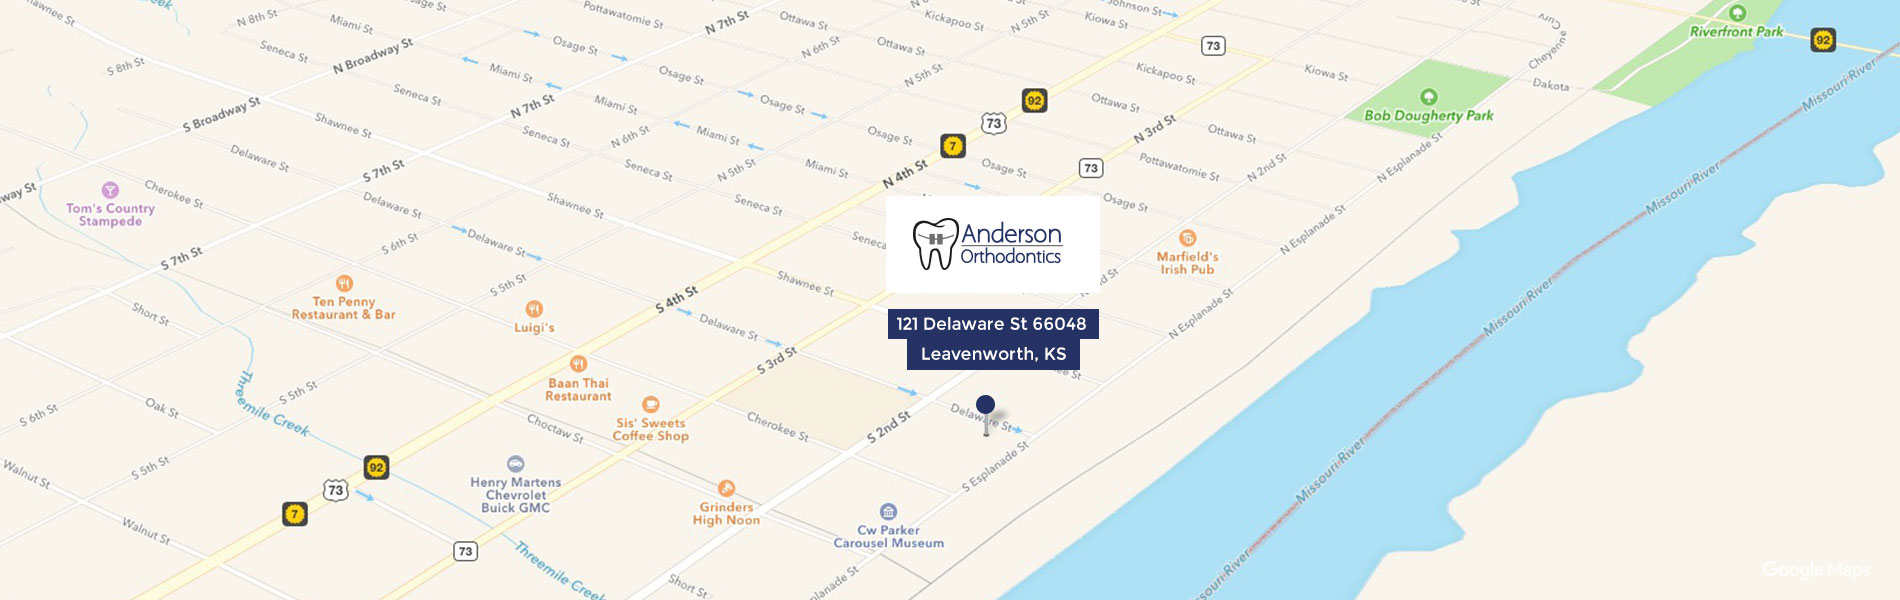 Map of Anderson Orthodontics location